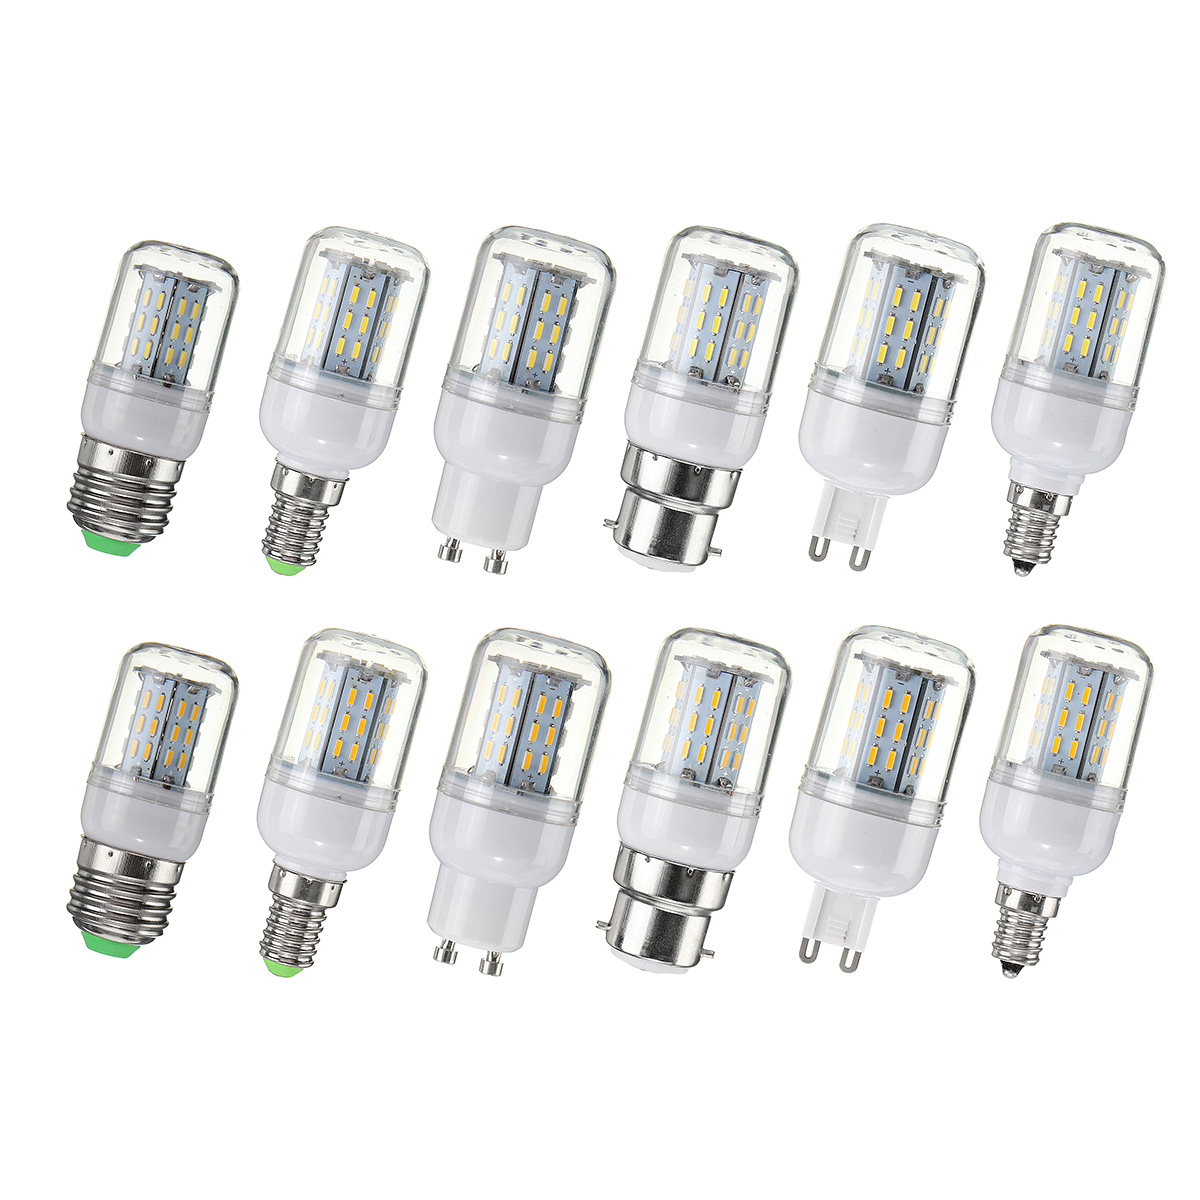 Dimmable-E27-E14-E12-B22-GU10-G9-SMD4014-4W-LED-Corn-Bulb-Light-Lamp-AC110V-1126662-2